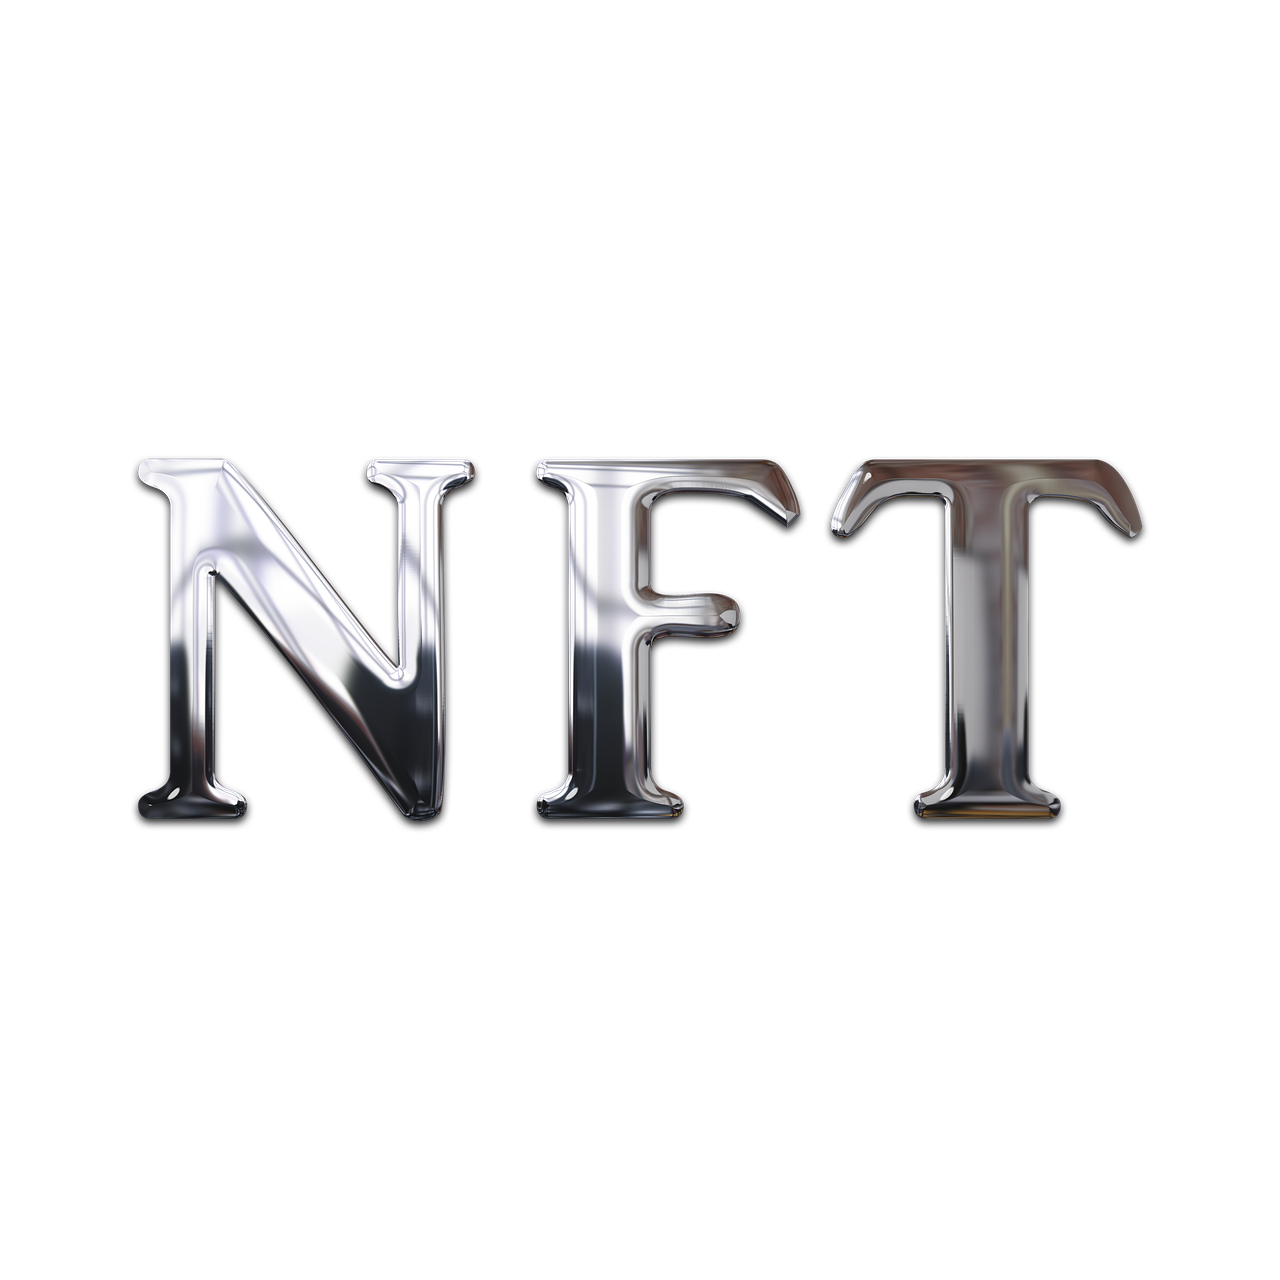 NFT Statistics